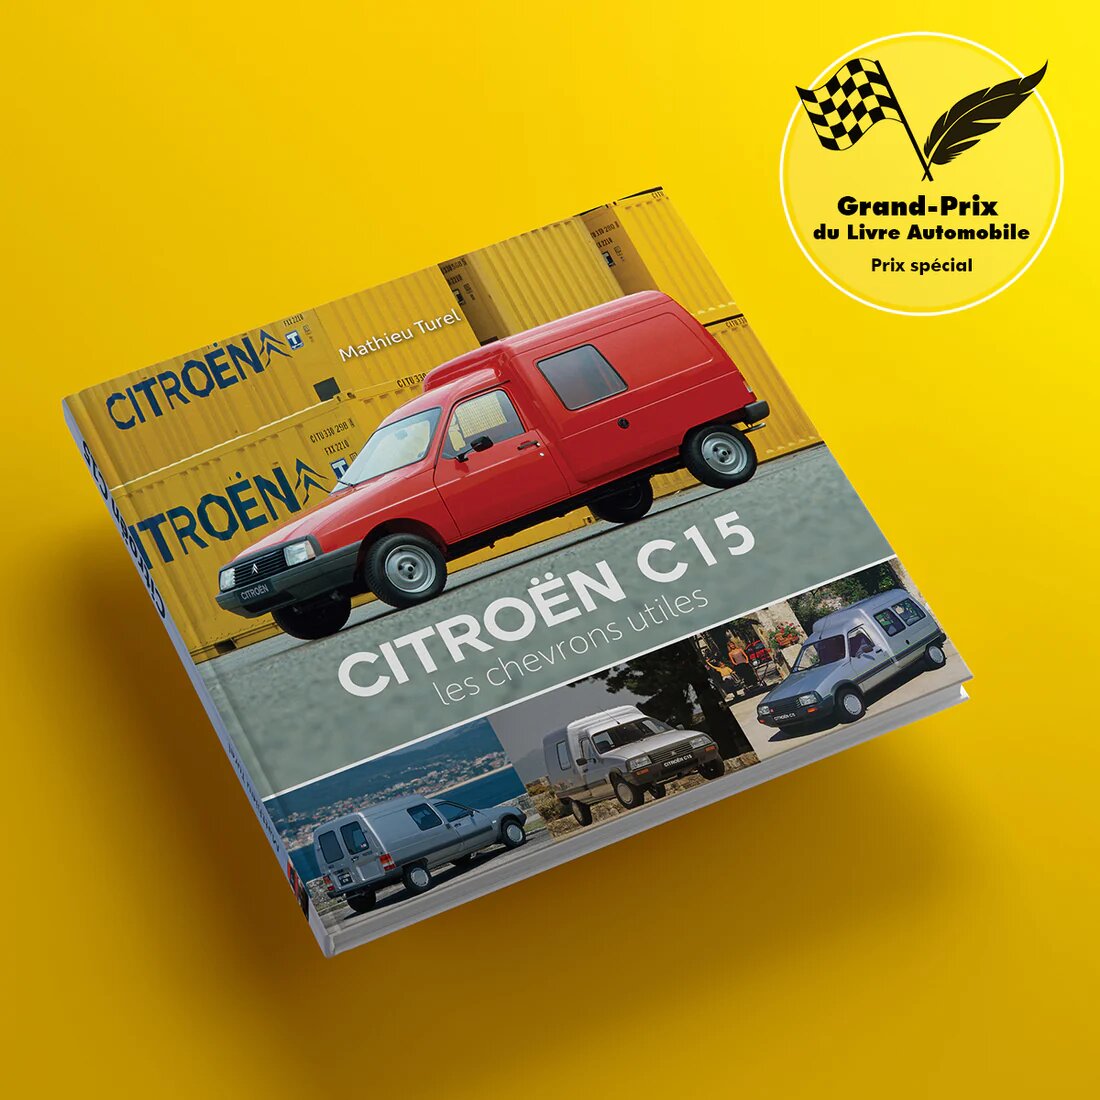 Citroën C15, les chevrons utiles (F)